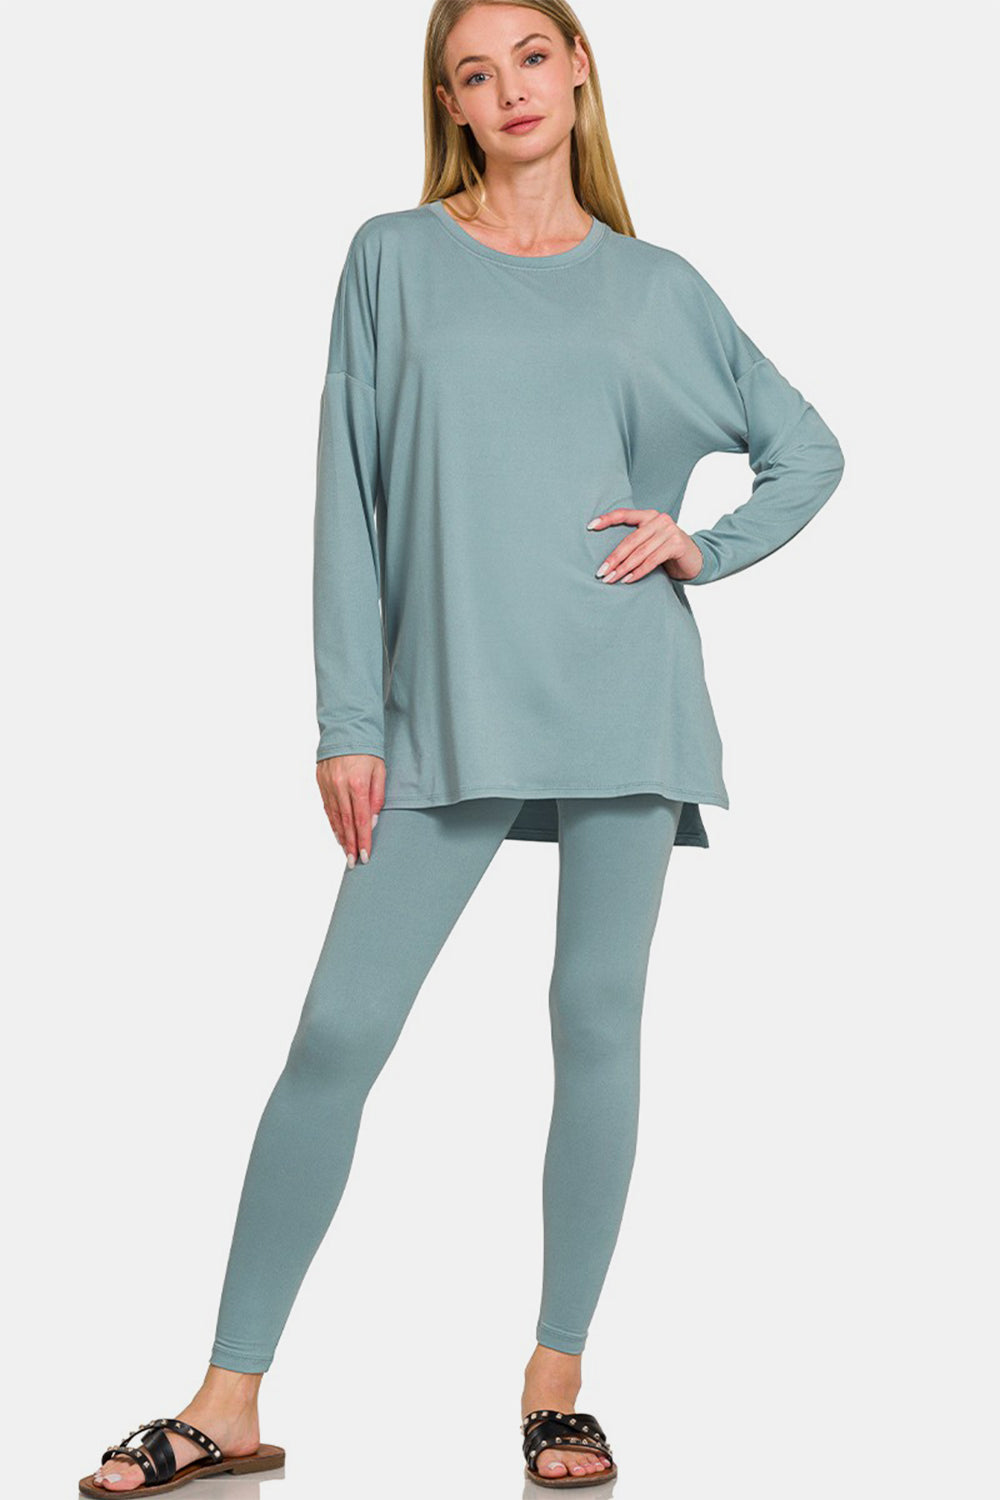 Zenana Blue Grey Brushed Microfiber Long Sleeve Top and Leggings Lounge Set Blue Grey Trendsi